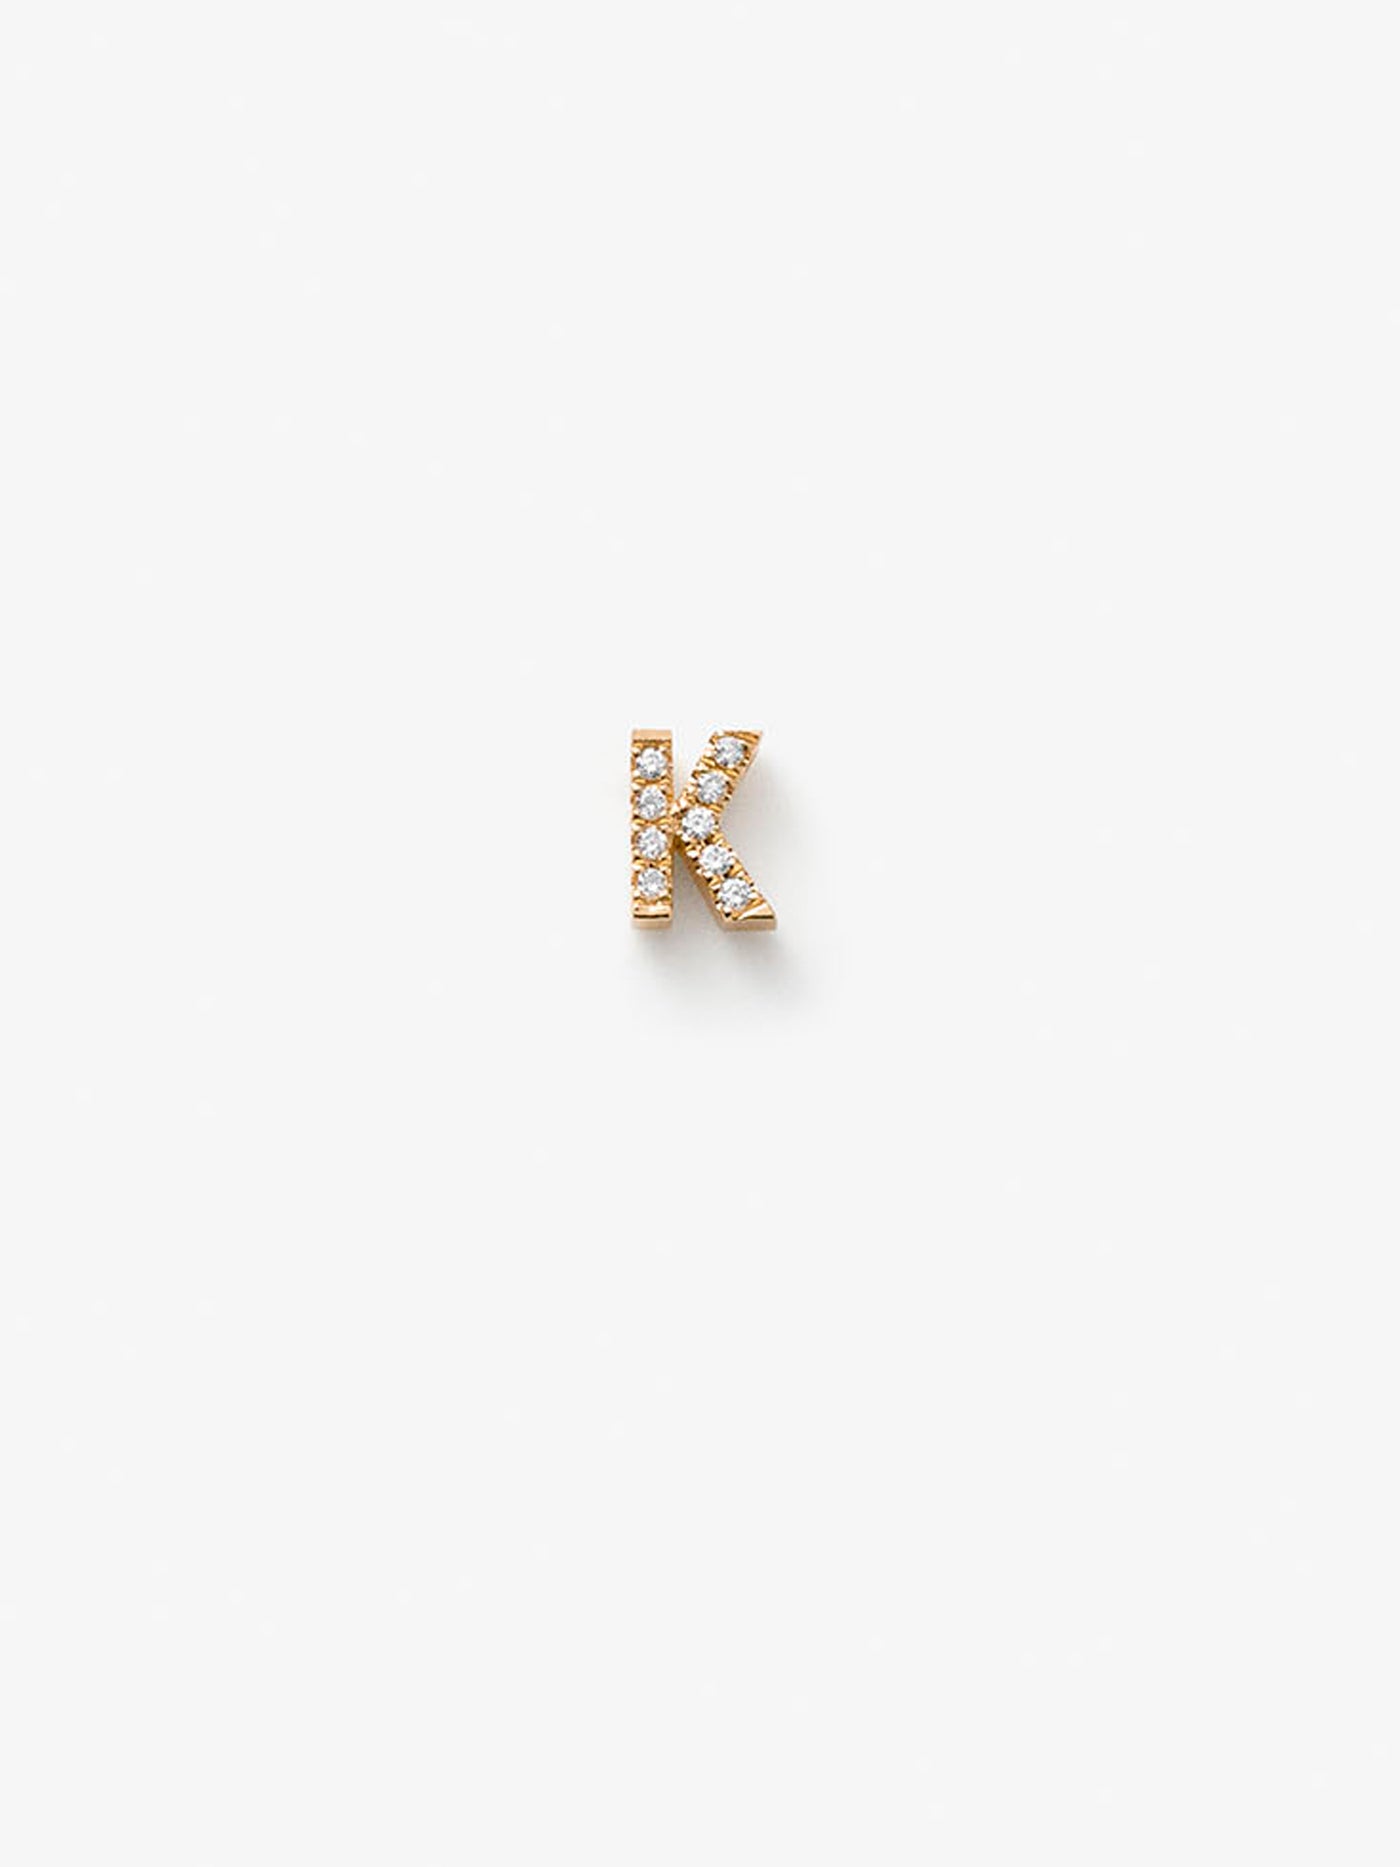 Letter K in Diamonds and 18k Gold